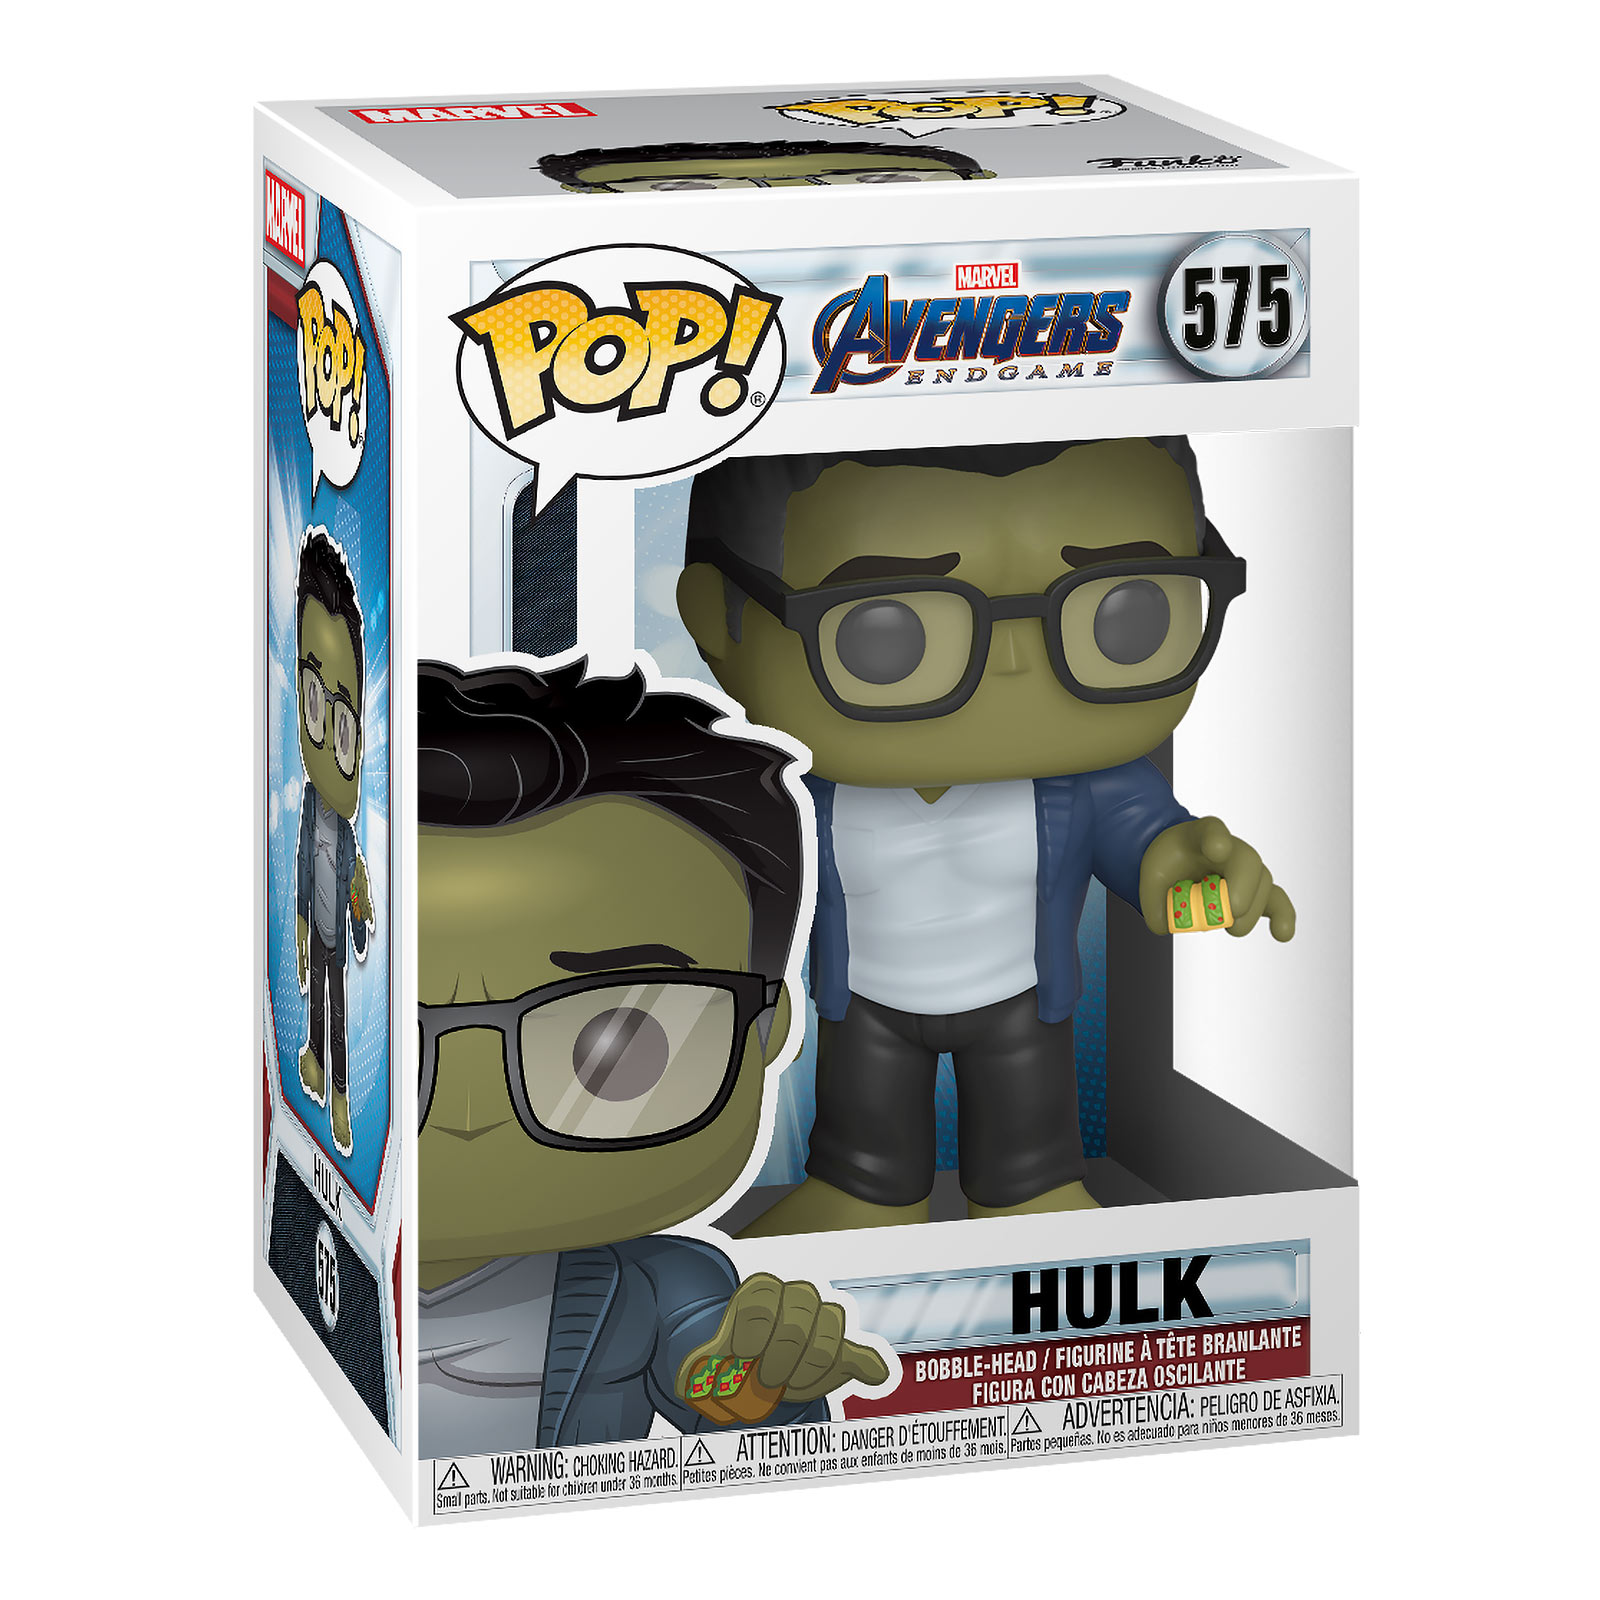 Avengers - Hulk avec Taco Endgame Figurine Funko Pop à tête branlante